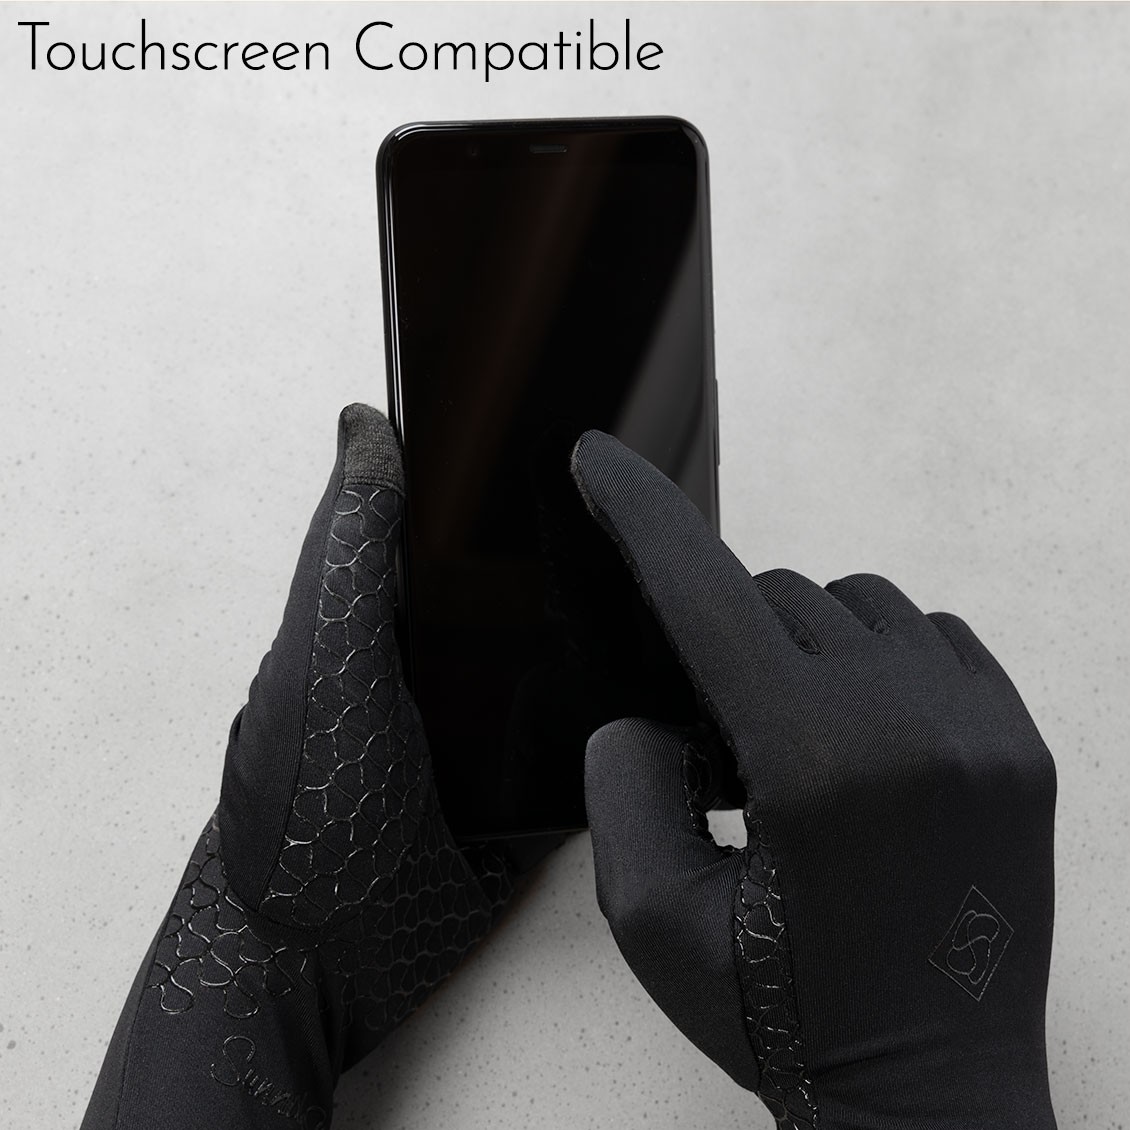 Sunnah Style Esteem Signature Gloves v2 Wrist Length Touchscreen Compatible